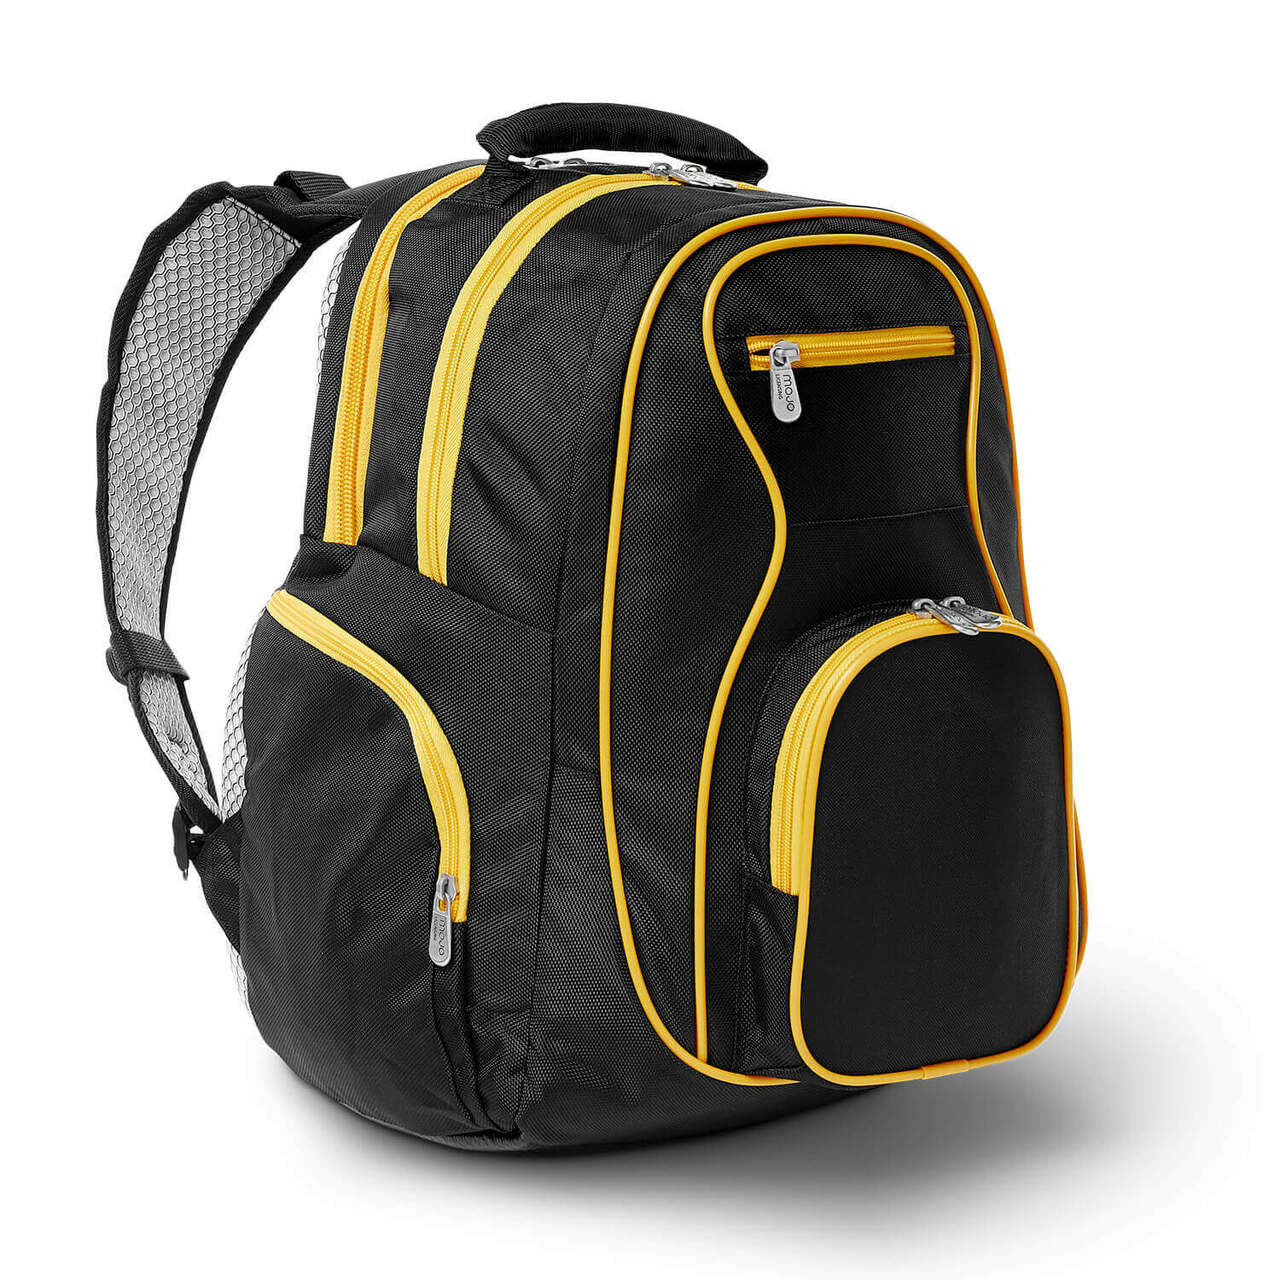 Predators Backpack | Nashville Predators Laptop Backpack